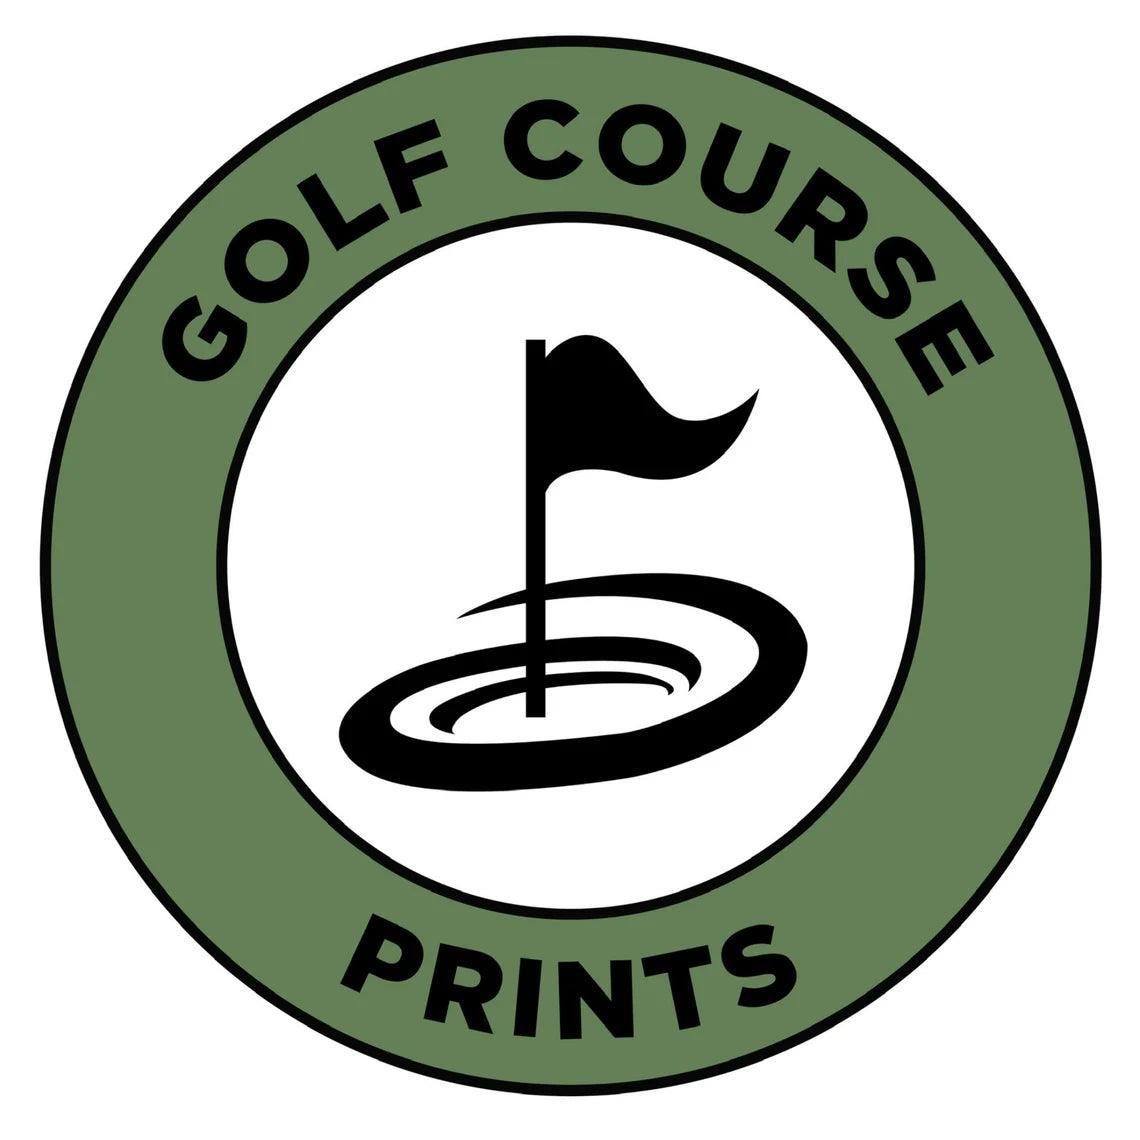 TPC Craig Ranch, Texas - Printed Golf Courses